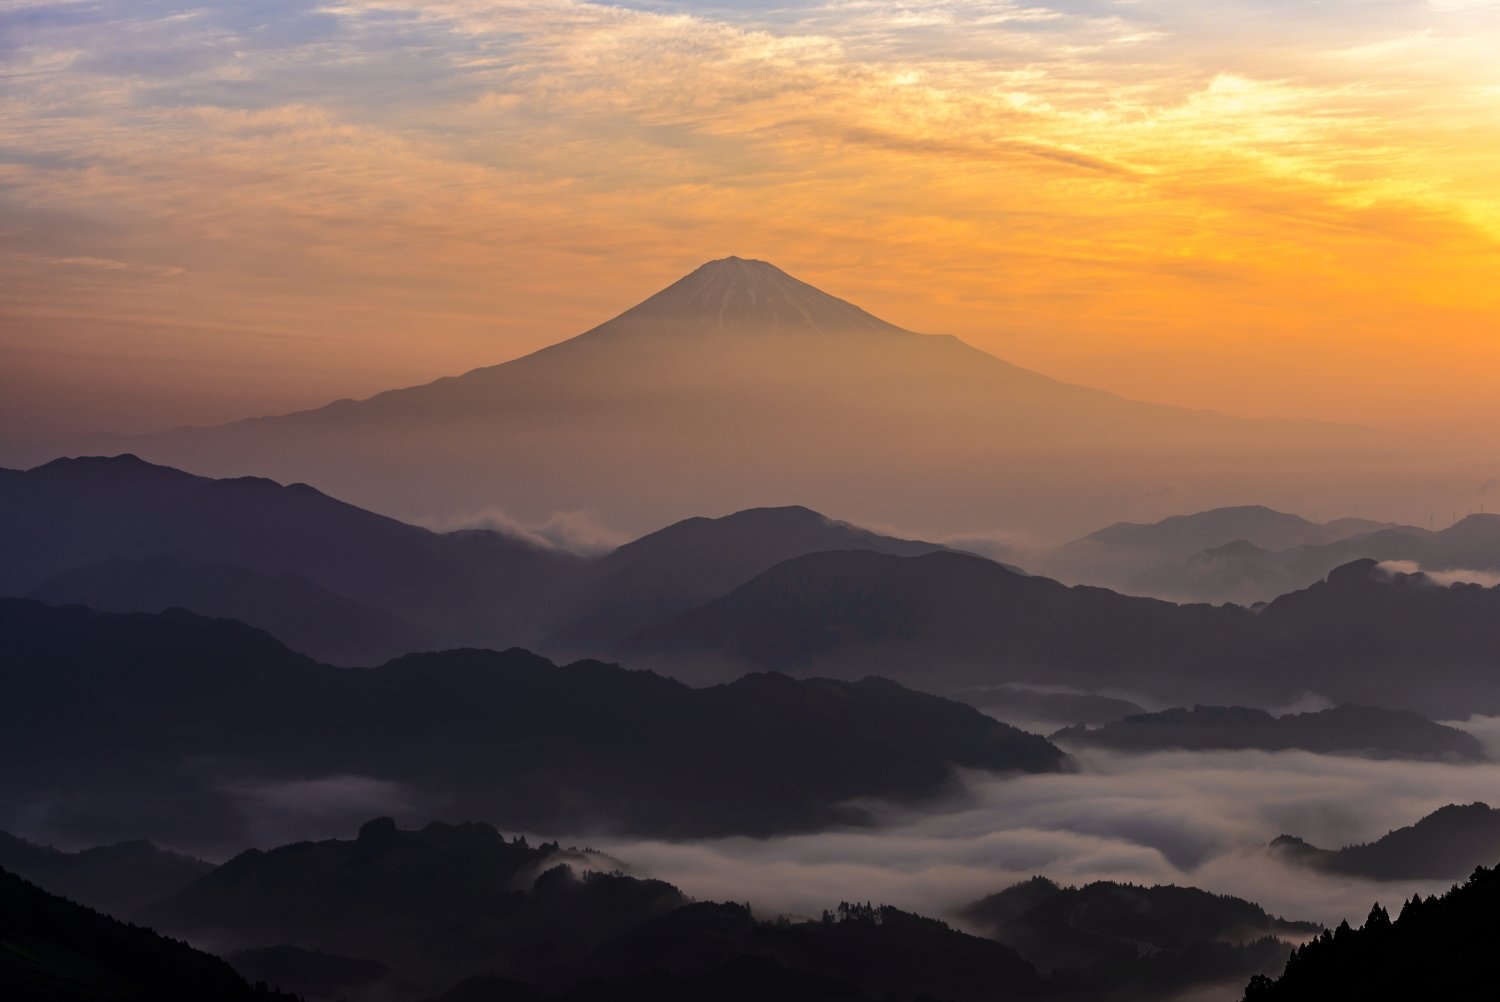 Fuji,mountain,Japan,cloud,fog,mist,red,orange,glow,morning,sunrise,, Takashi